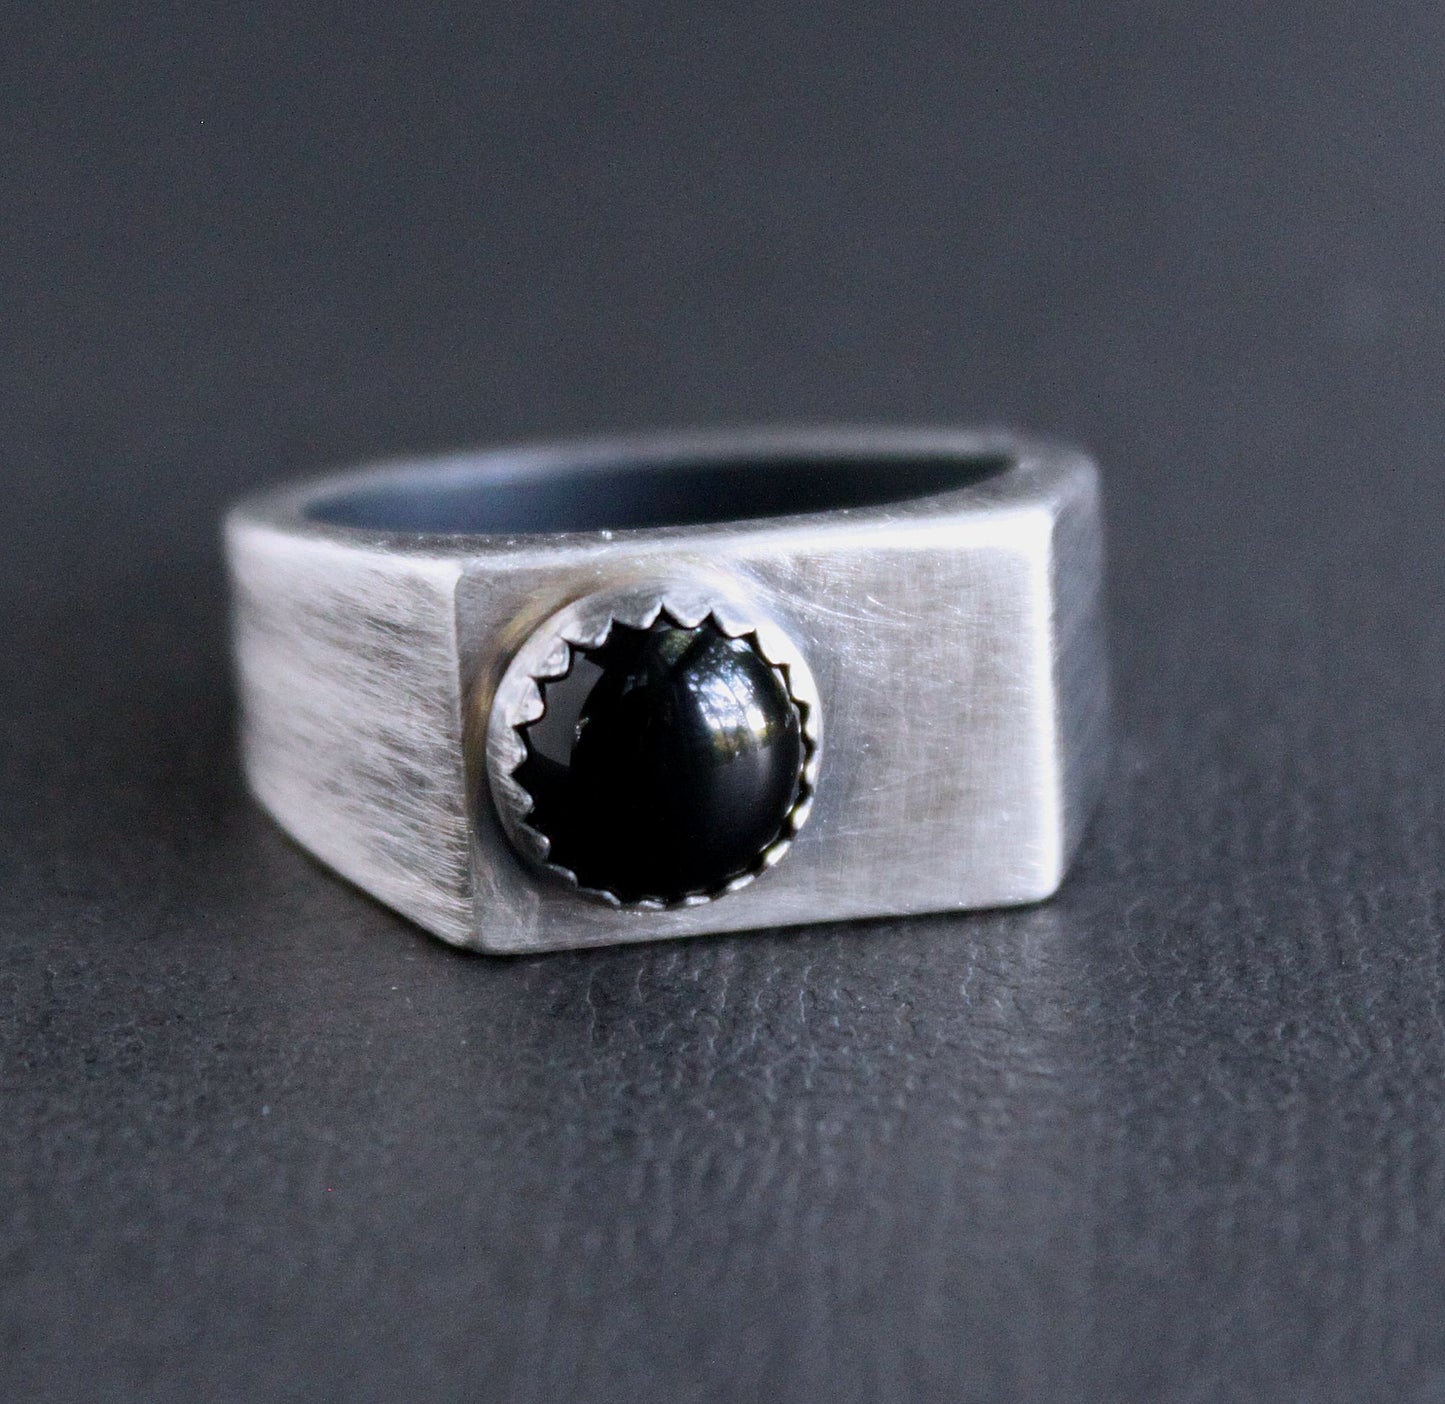 Black Onyx Stone Signet Ring, Heavy Sterling Silver, Size 10